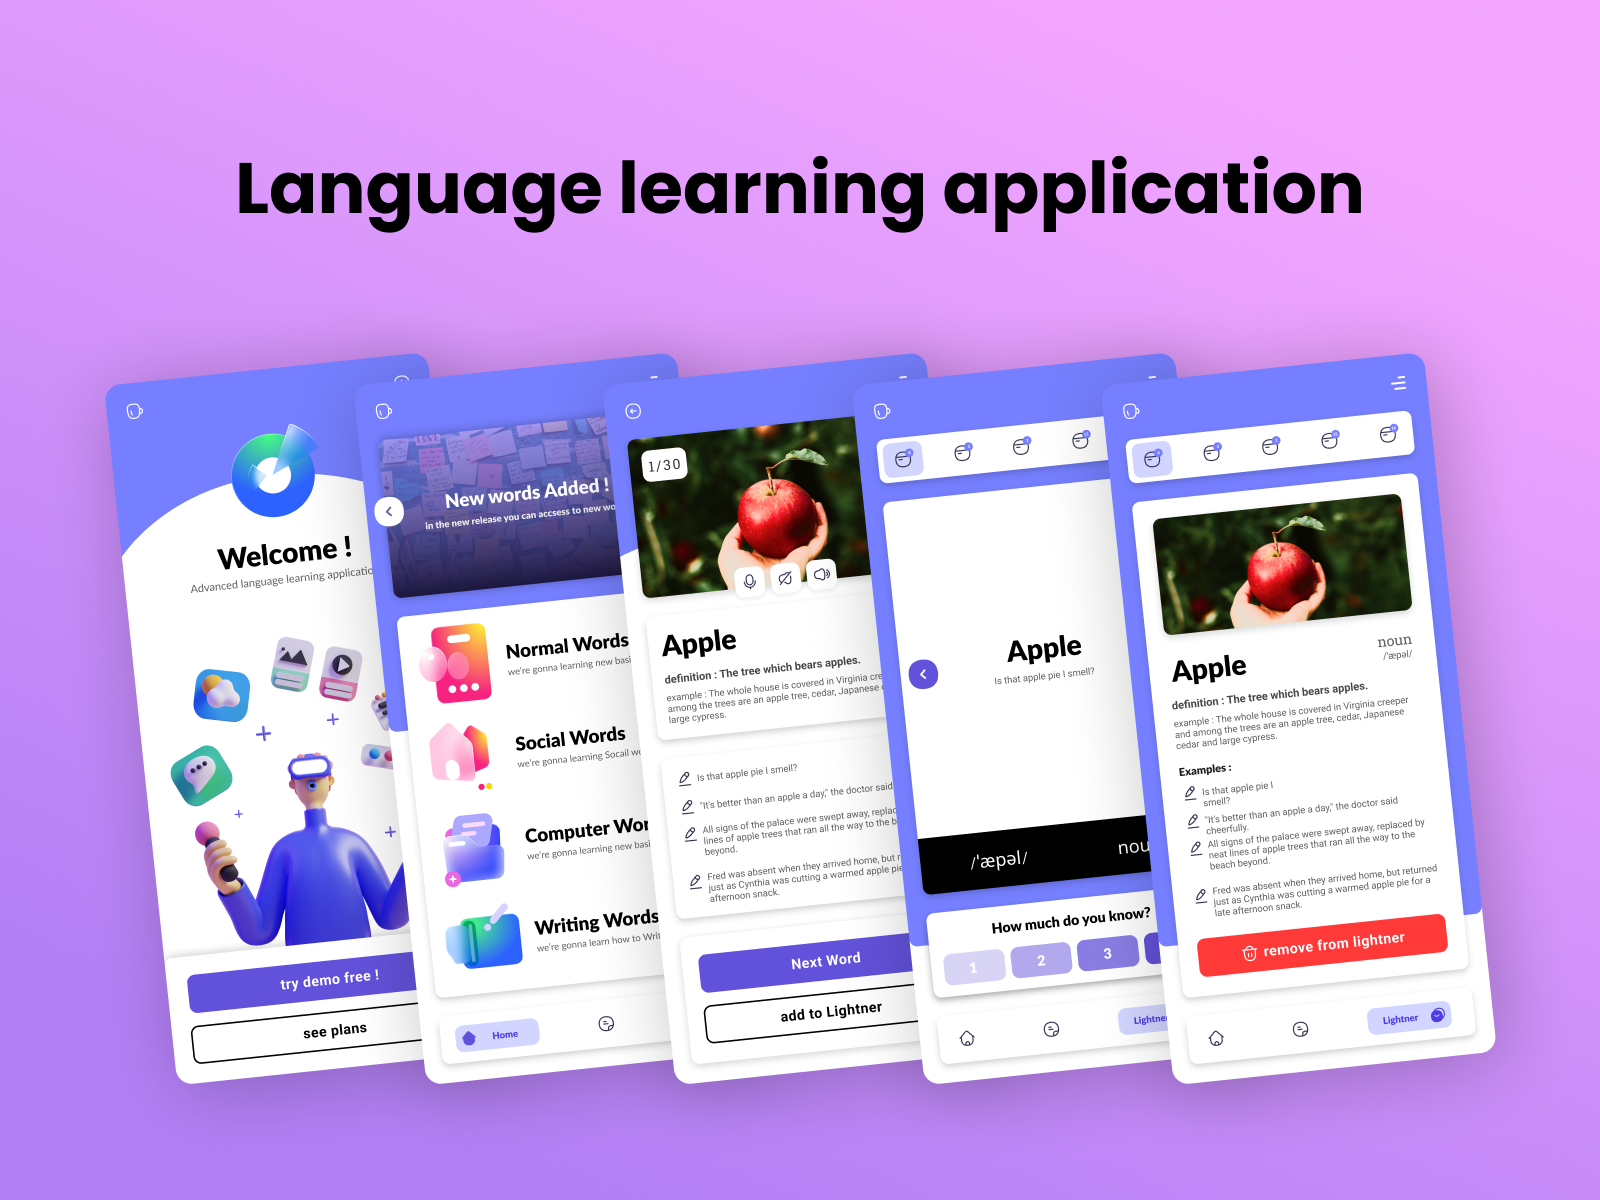 Language learning application by maryam nasrollhi on Dribbble